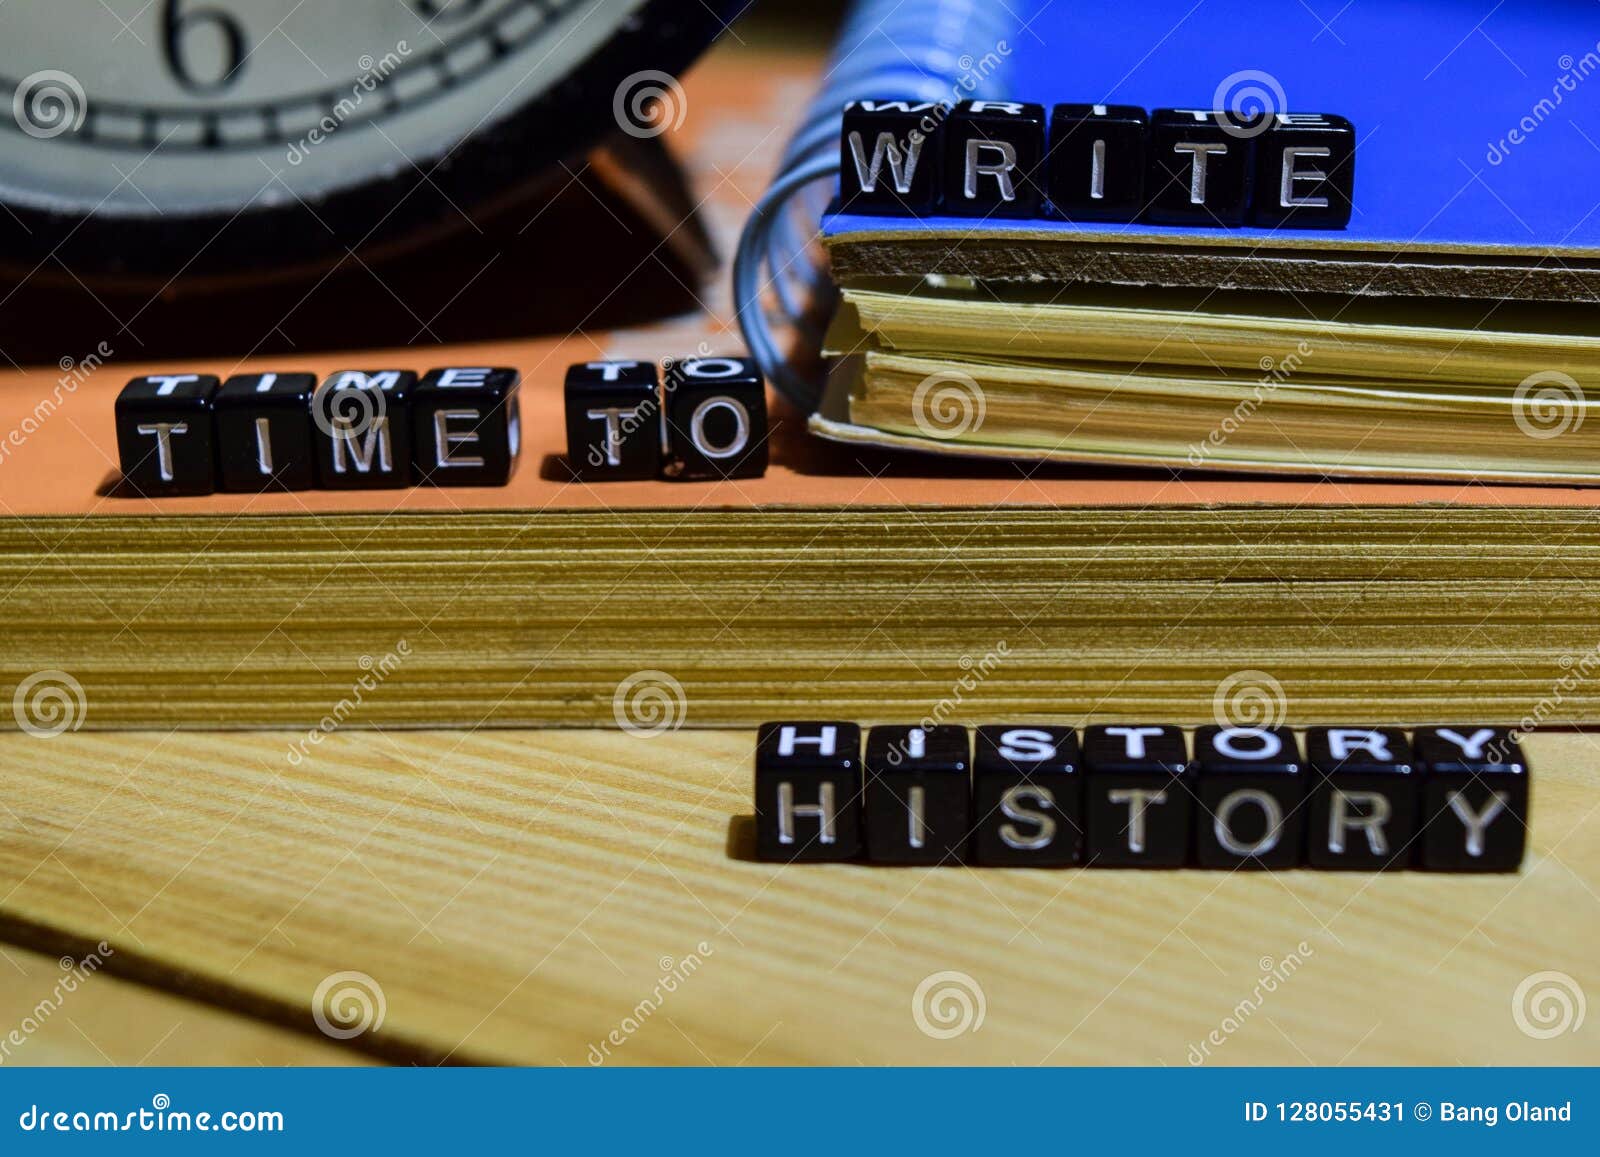 write_history readline